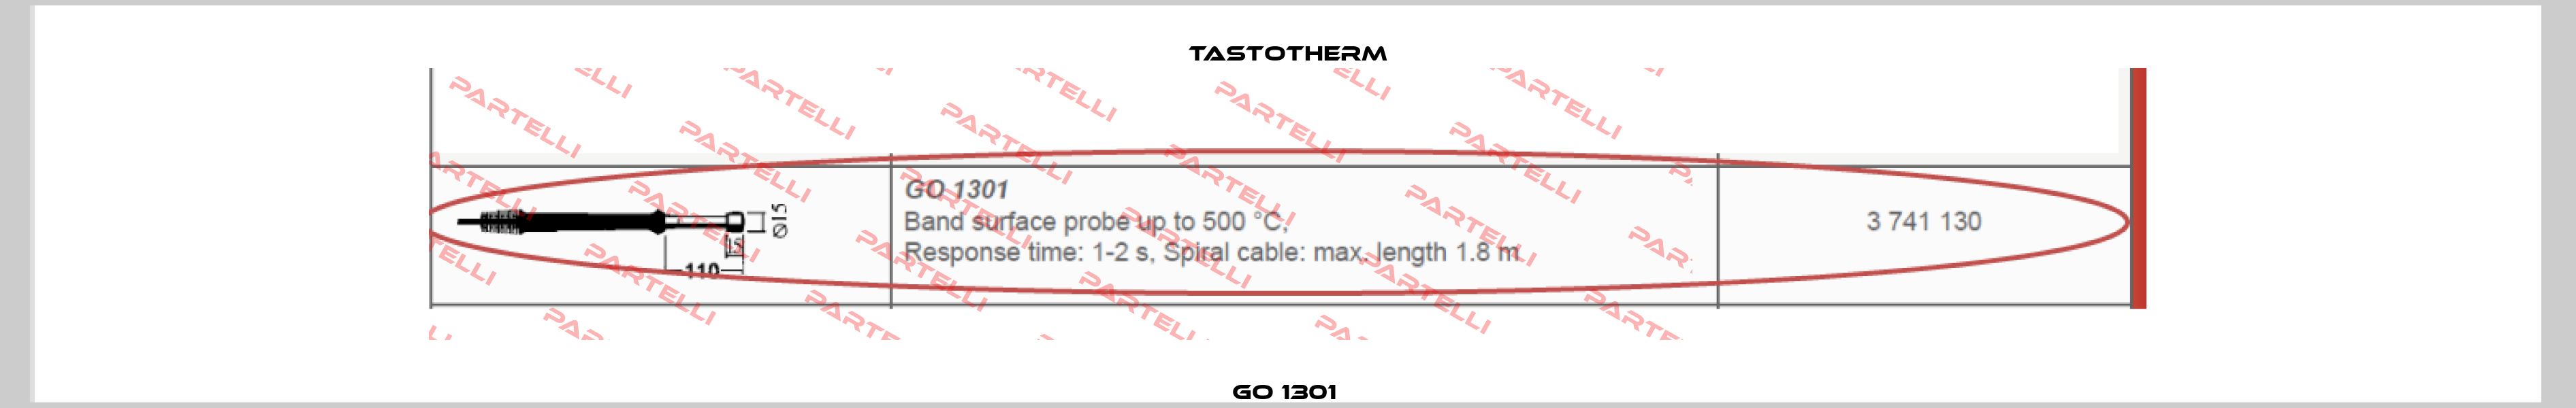 GO 1301  Tastotherm